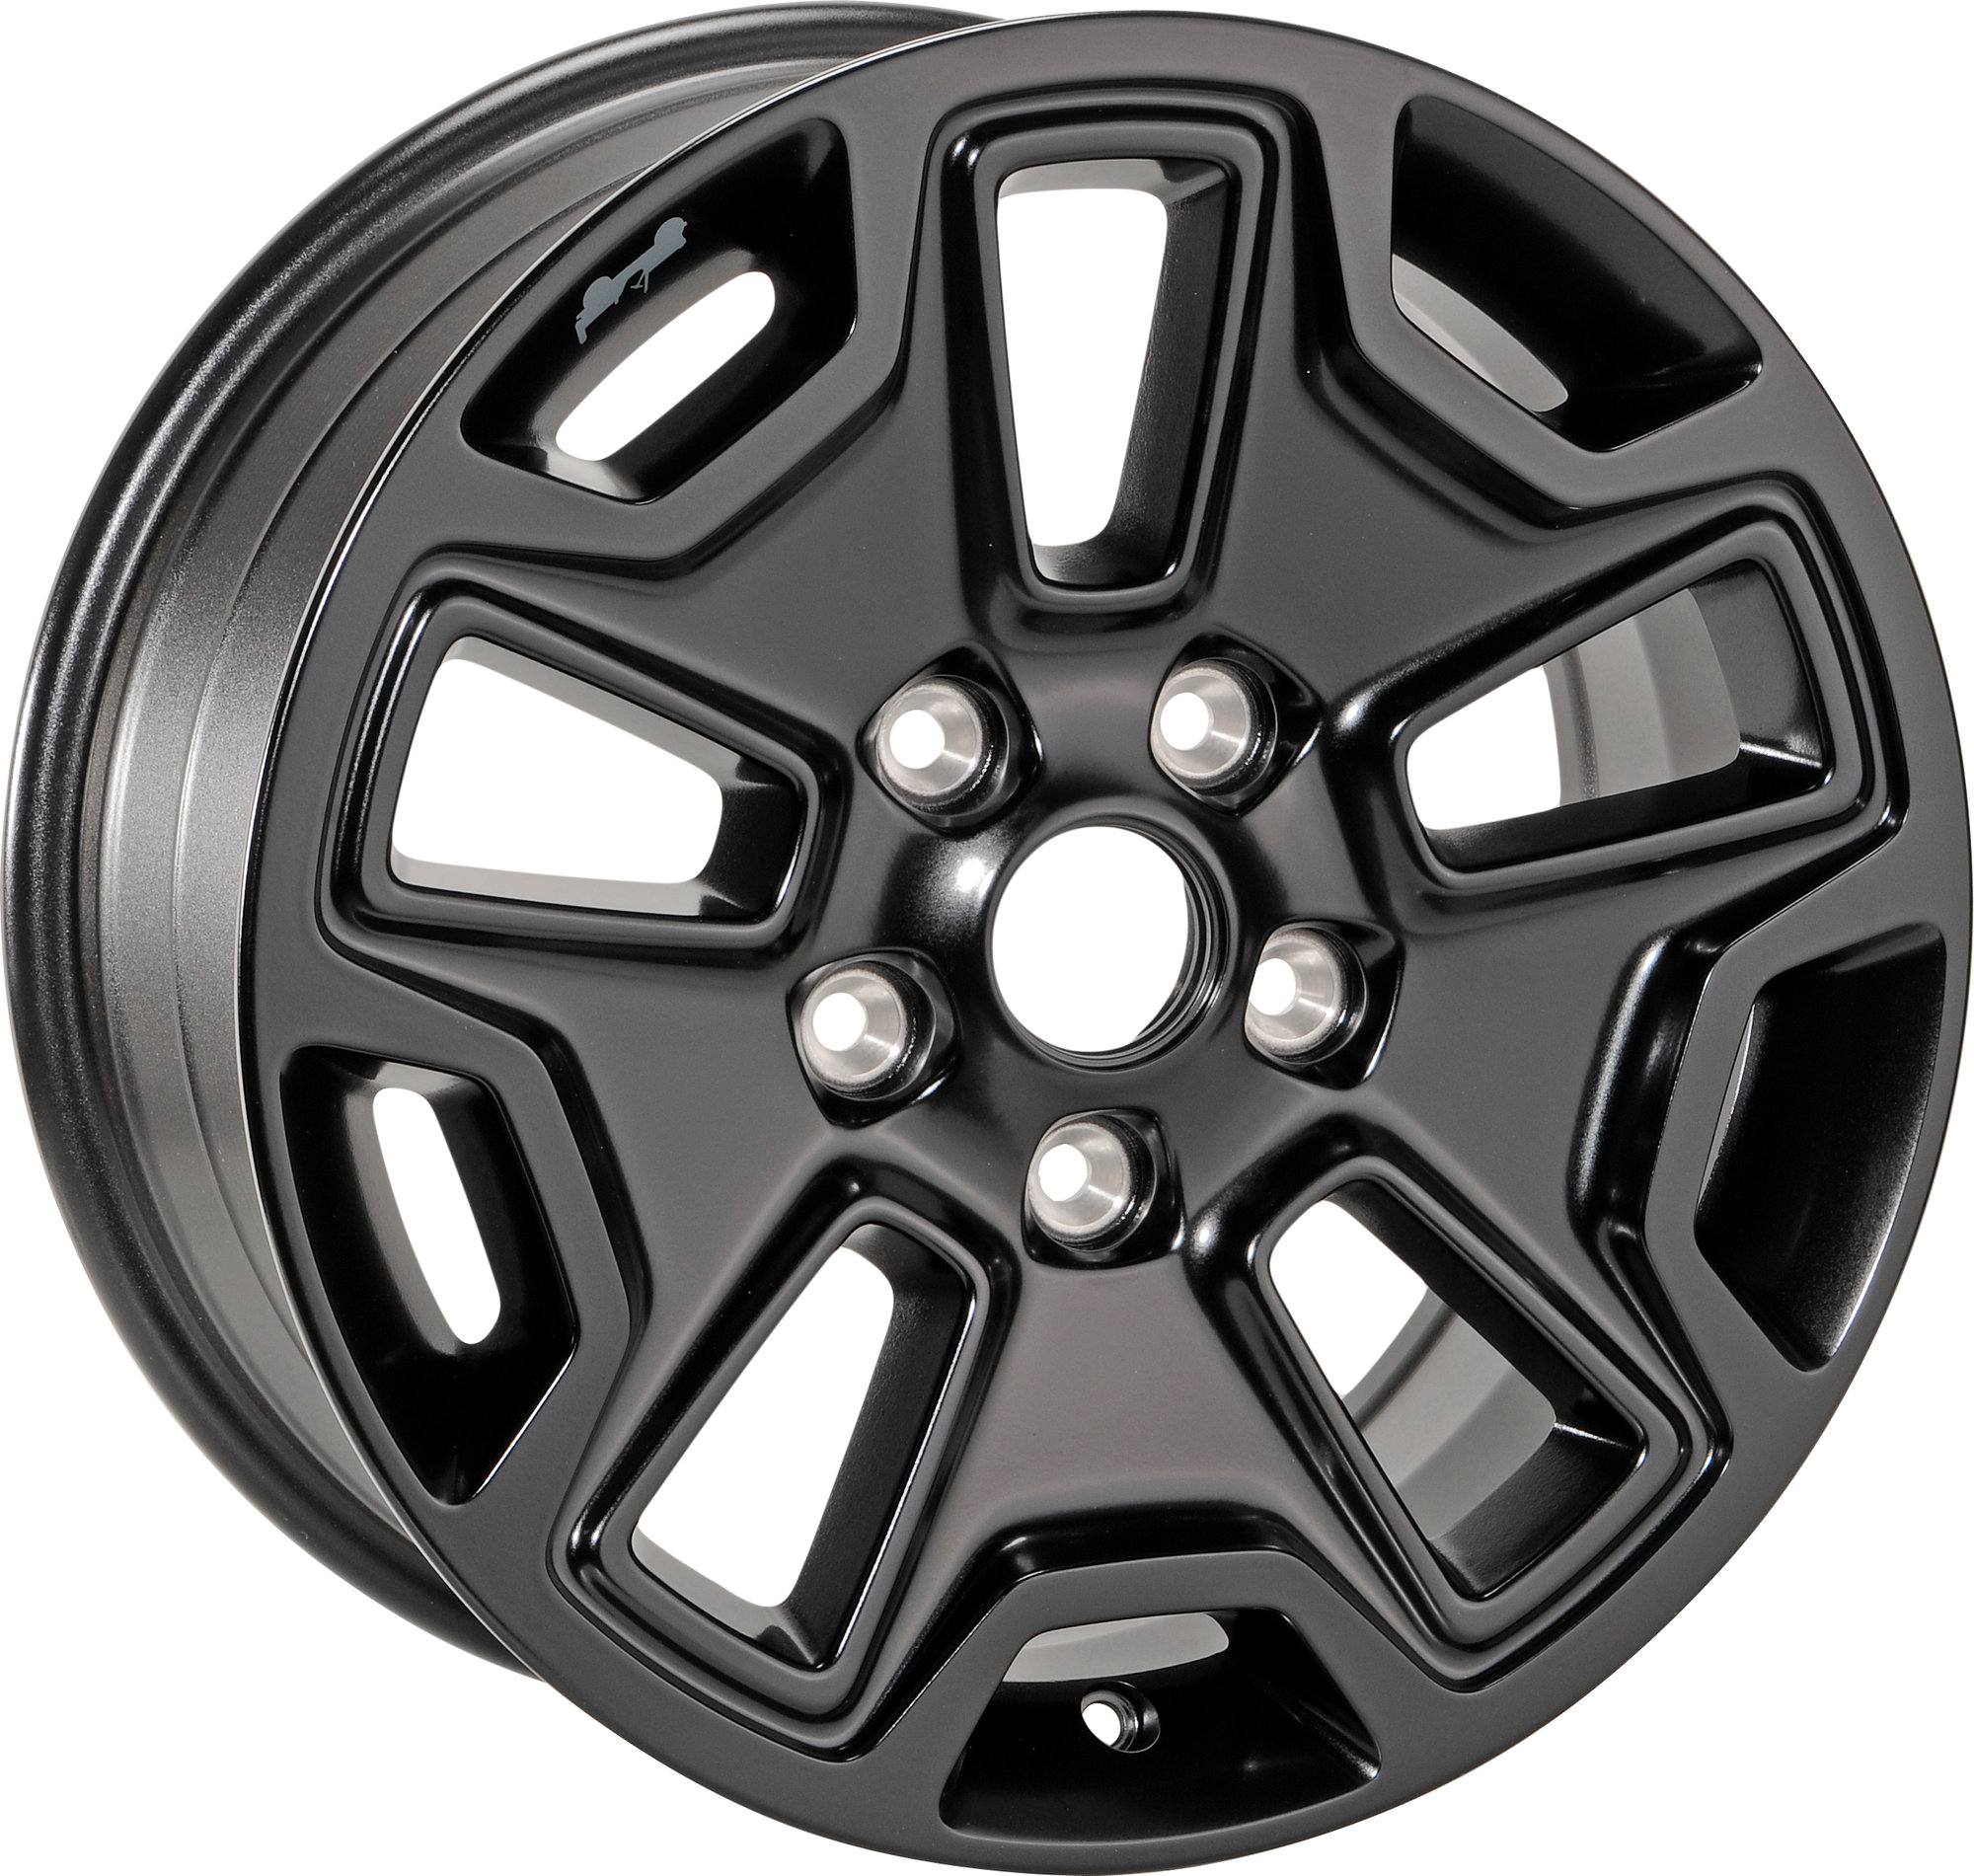 Mopar 5LW63RXFAA Rubicon Wheel in Gloss Black for 07-18 Jeep Wrangler JK  and 99-18 Grand Cherokee WJ, WK, & WK2 | Quadratec